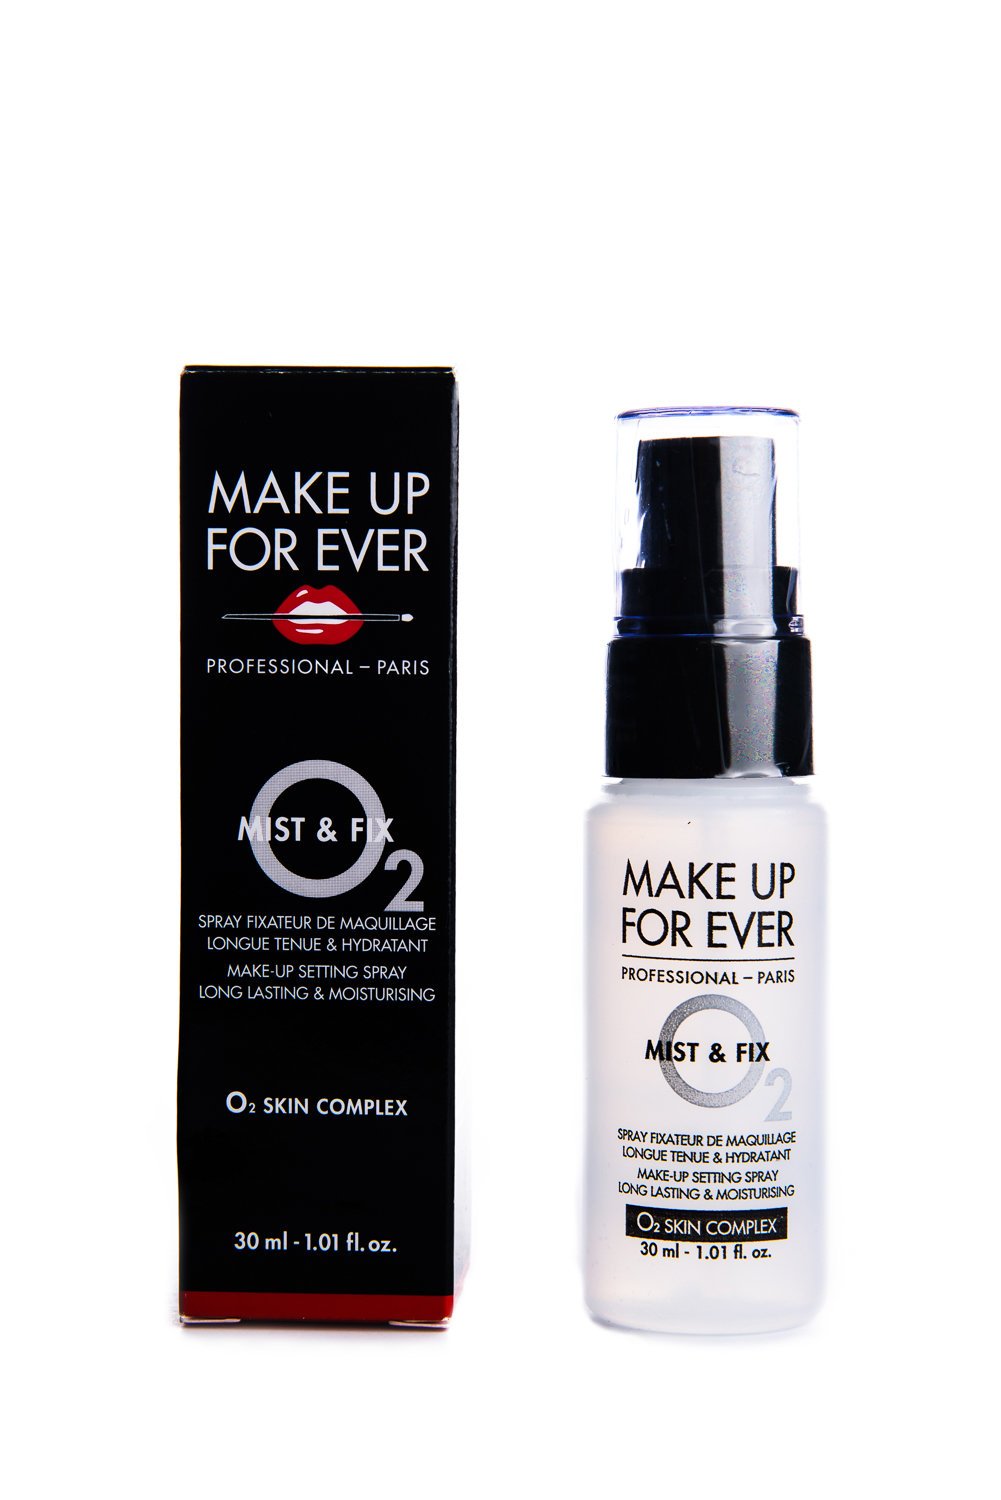 MAKE UP FOR EVER Mist & Fix Make-Up Setting Spray 1.01 [...]